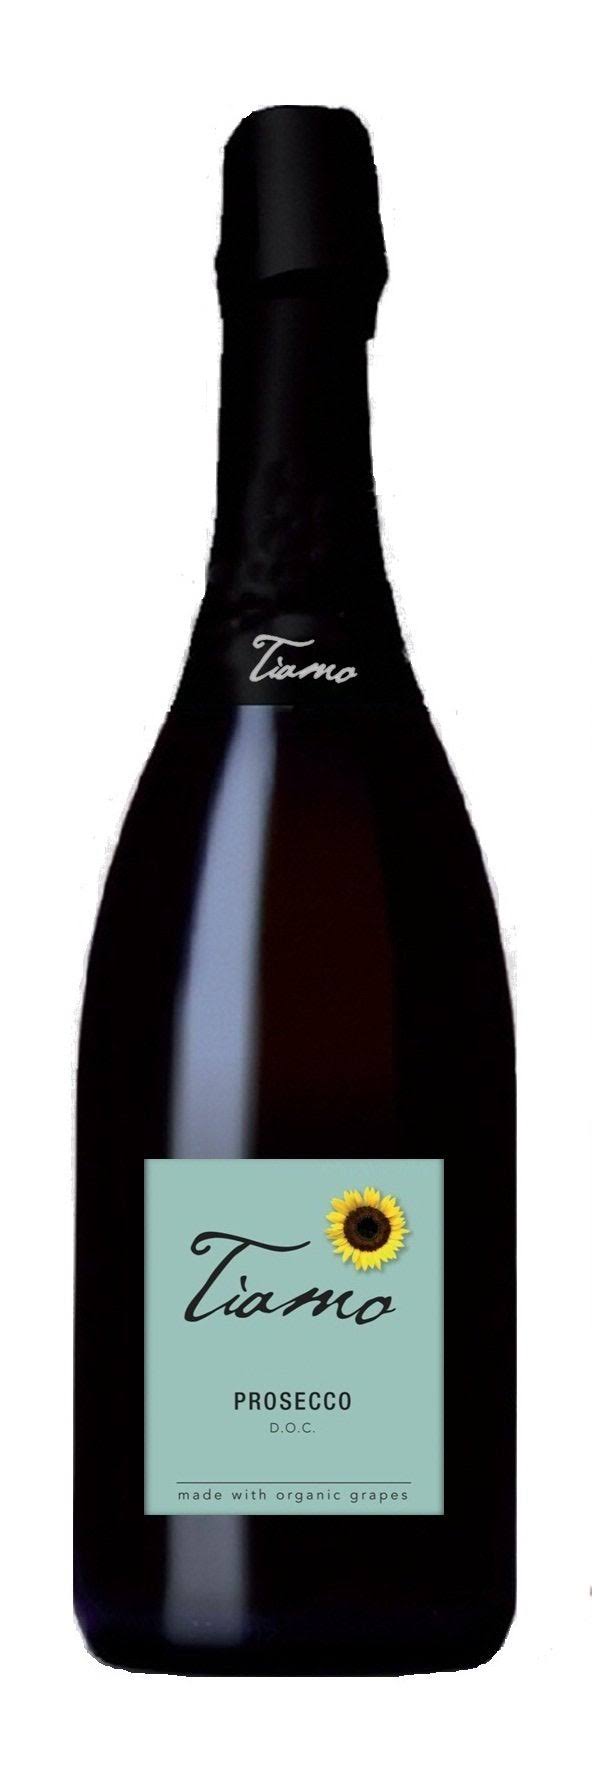 Tiamo Prosecco, Italy - 750 ml bottle